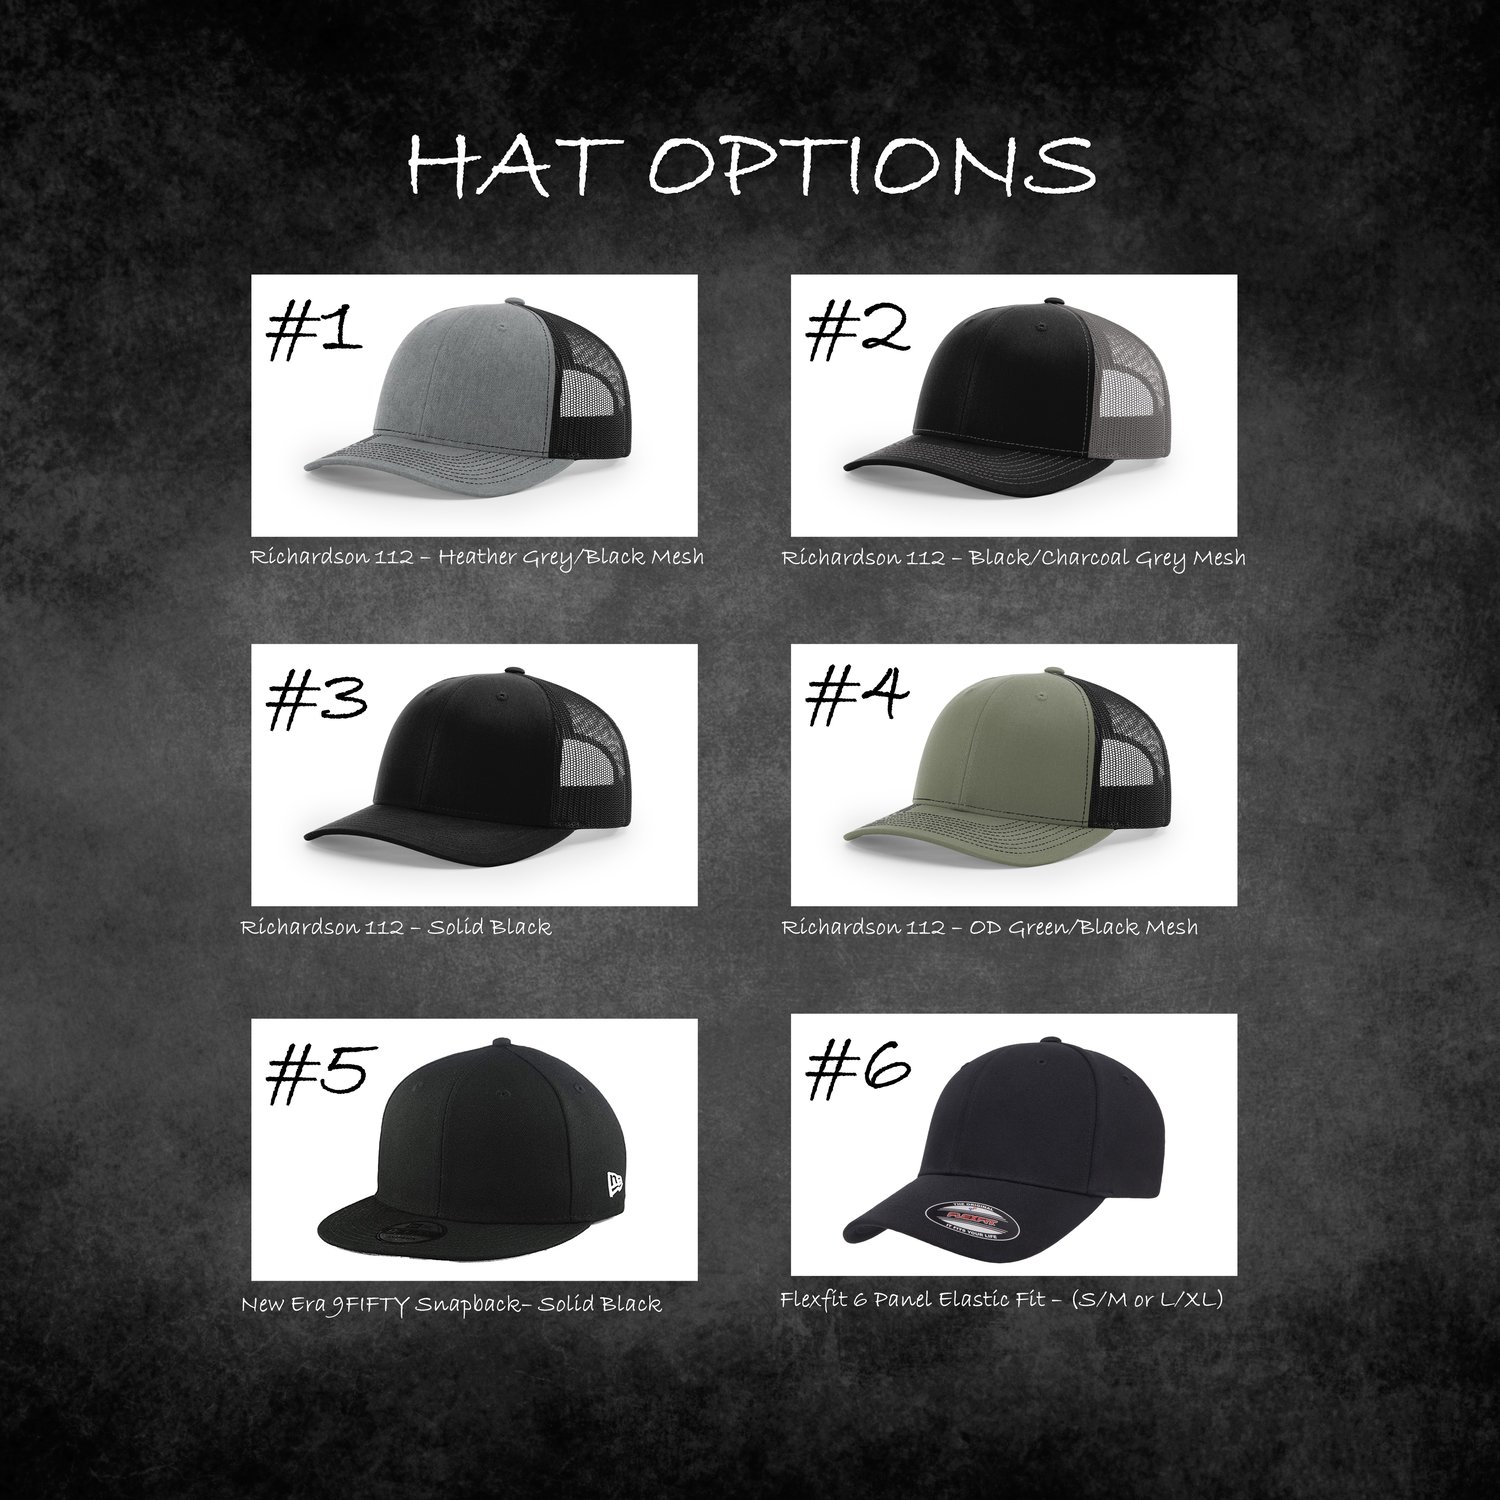 Image of Custom Hats